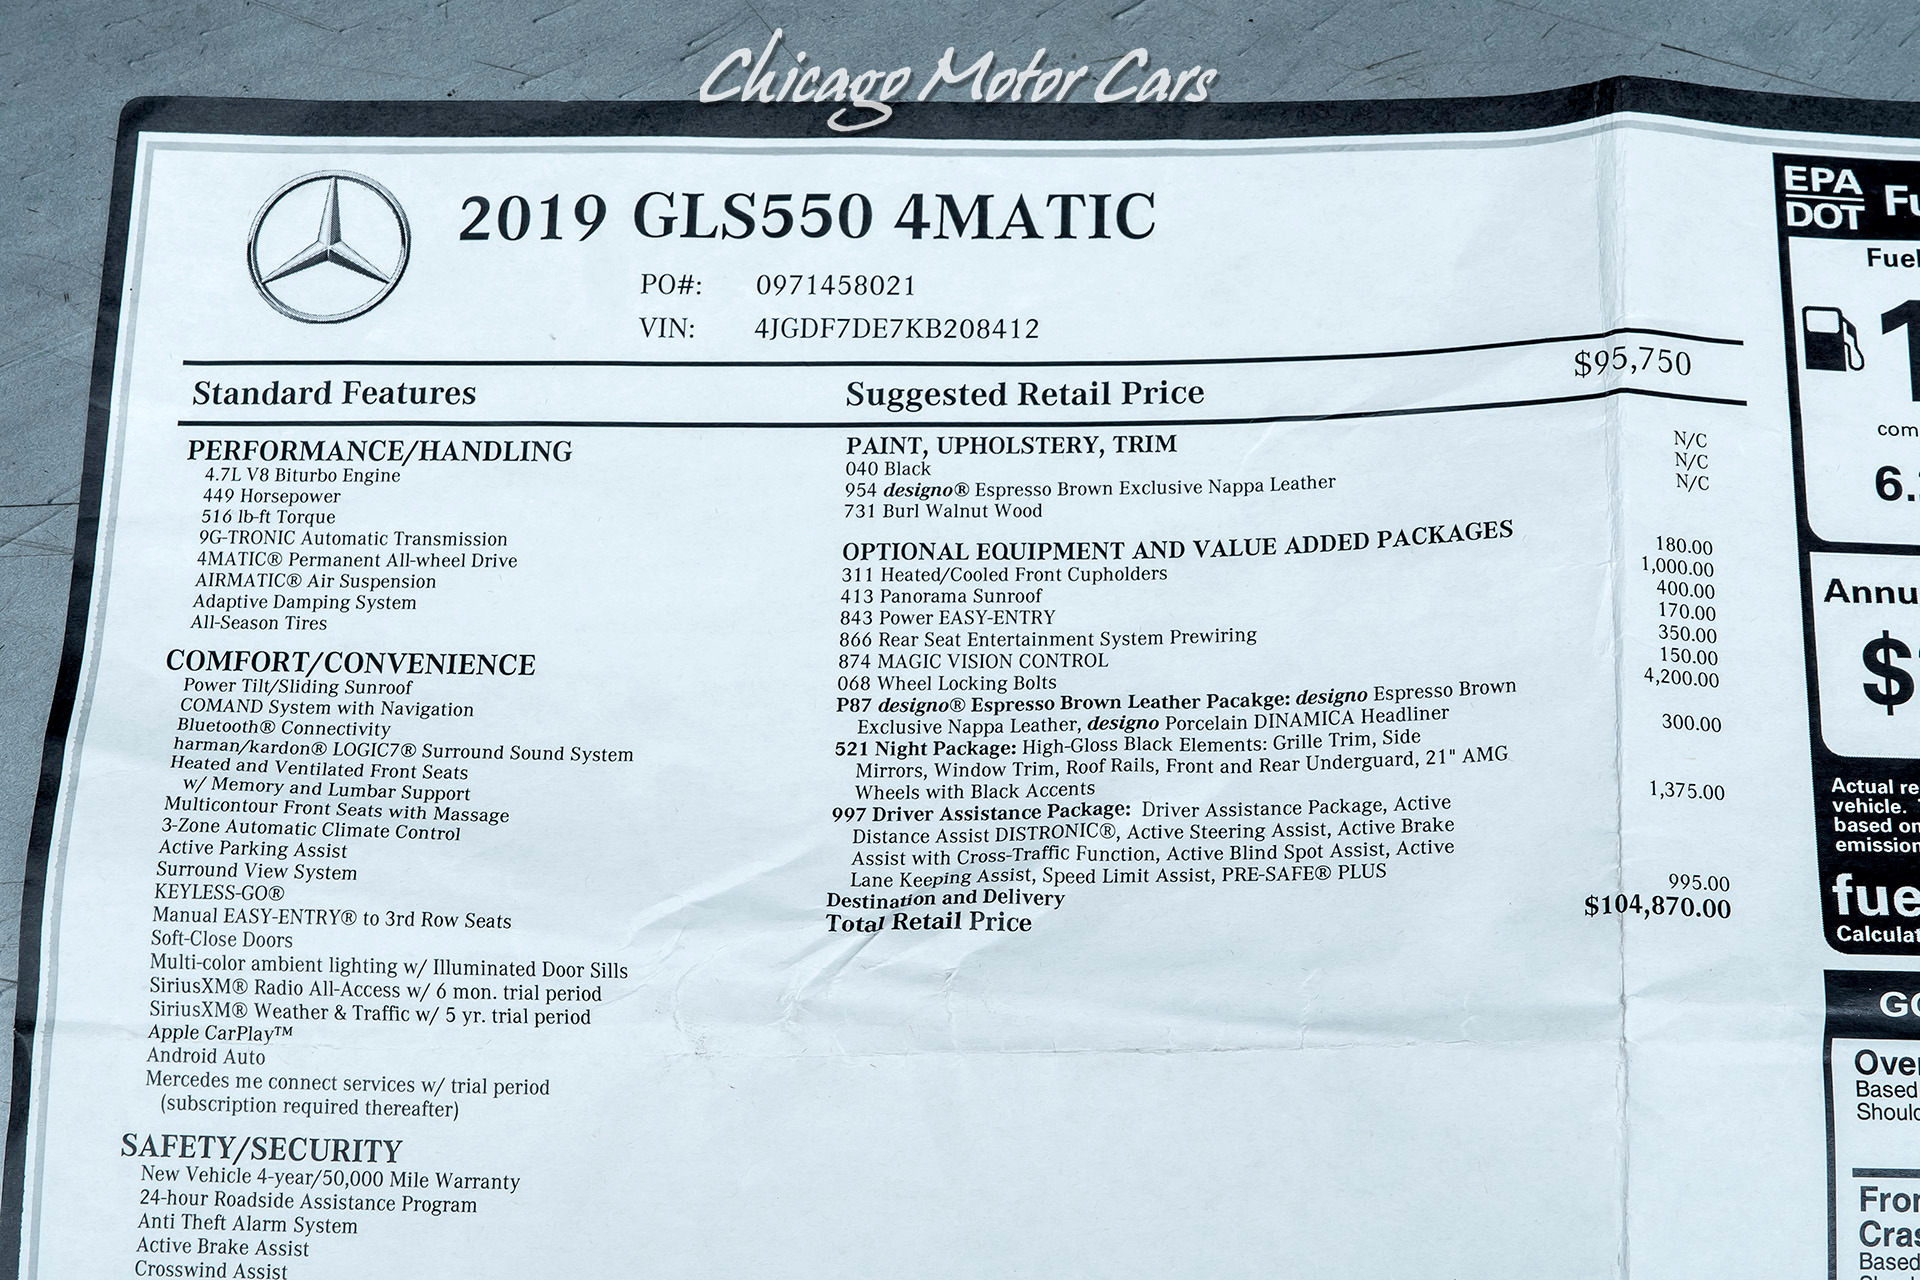 Used-2019-Mercedes-Benz-GLS550-4MATIC-SUV-Original-MSRP-104870-Only-7k-Miles